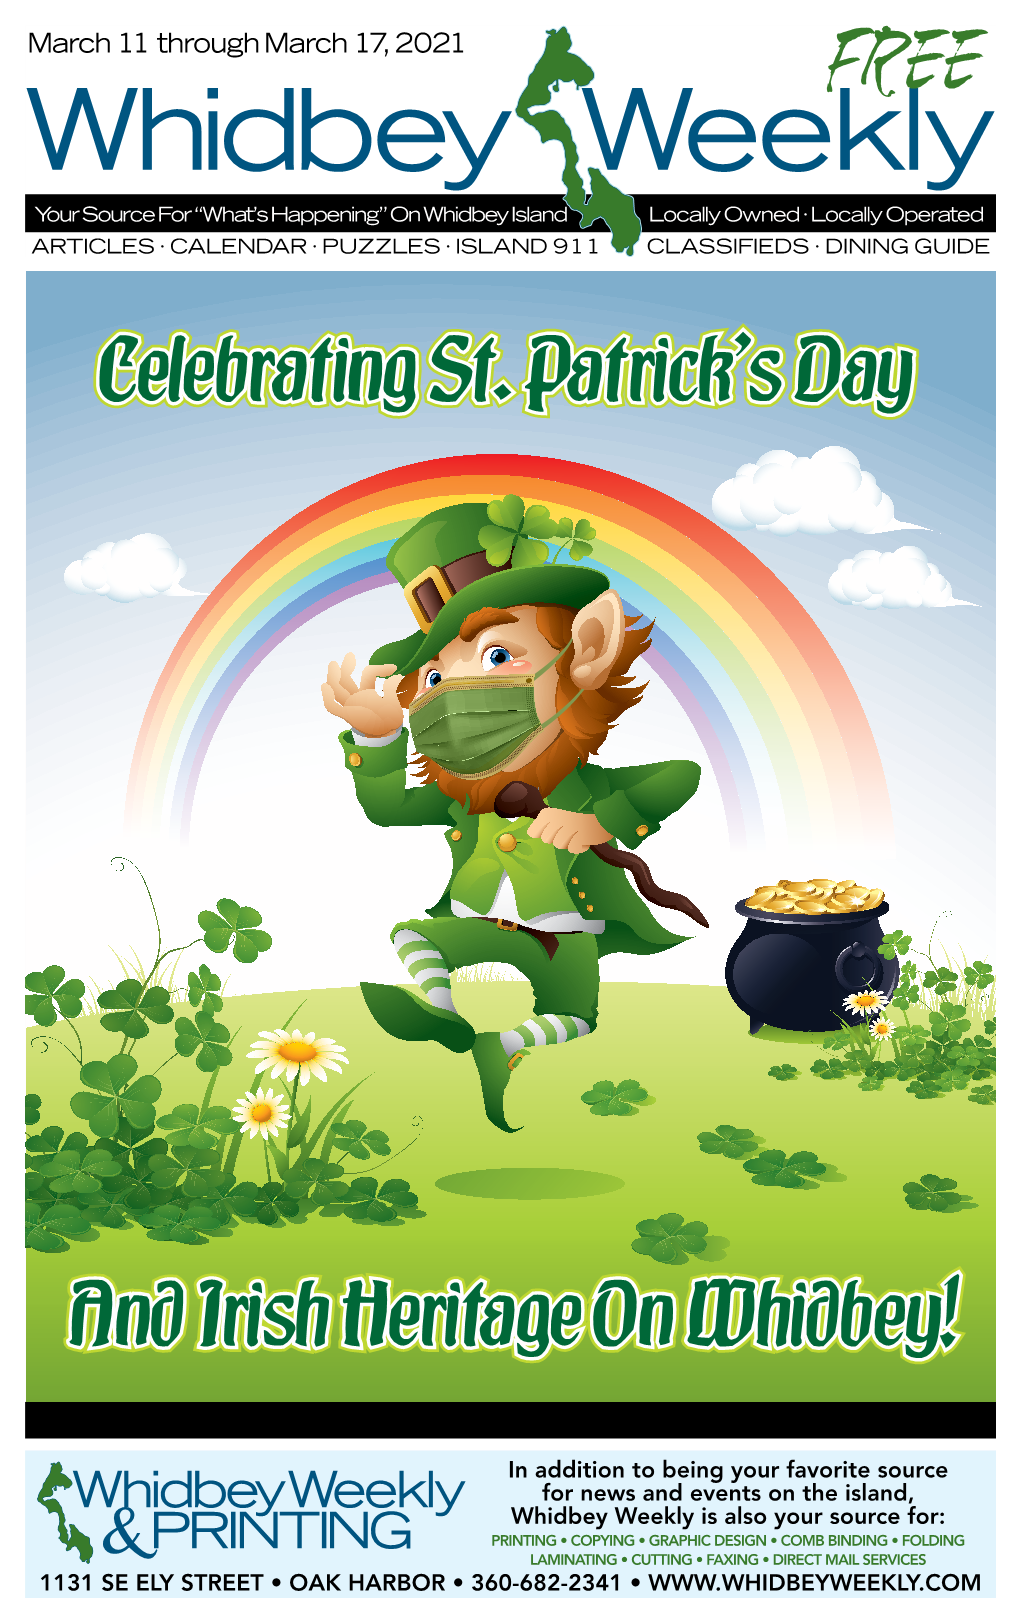 Celebrating St. Patrick's Day and Irish Heritage On